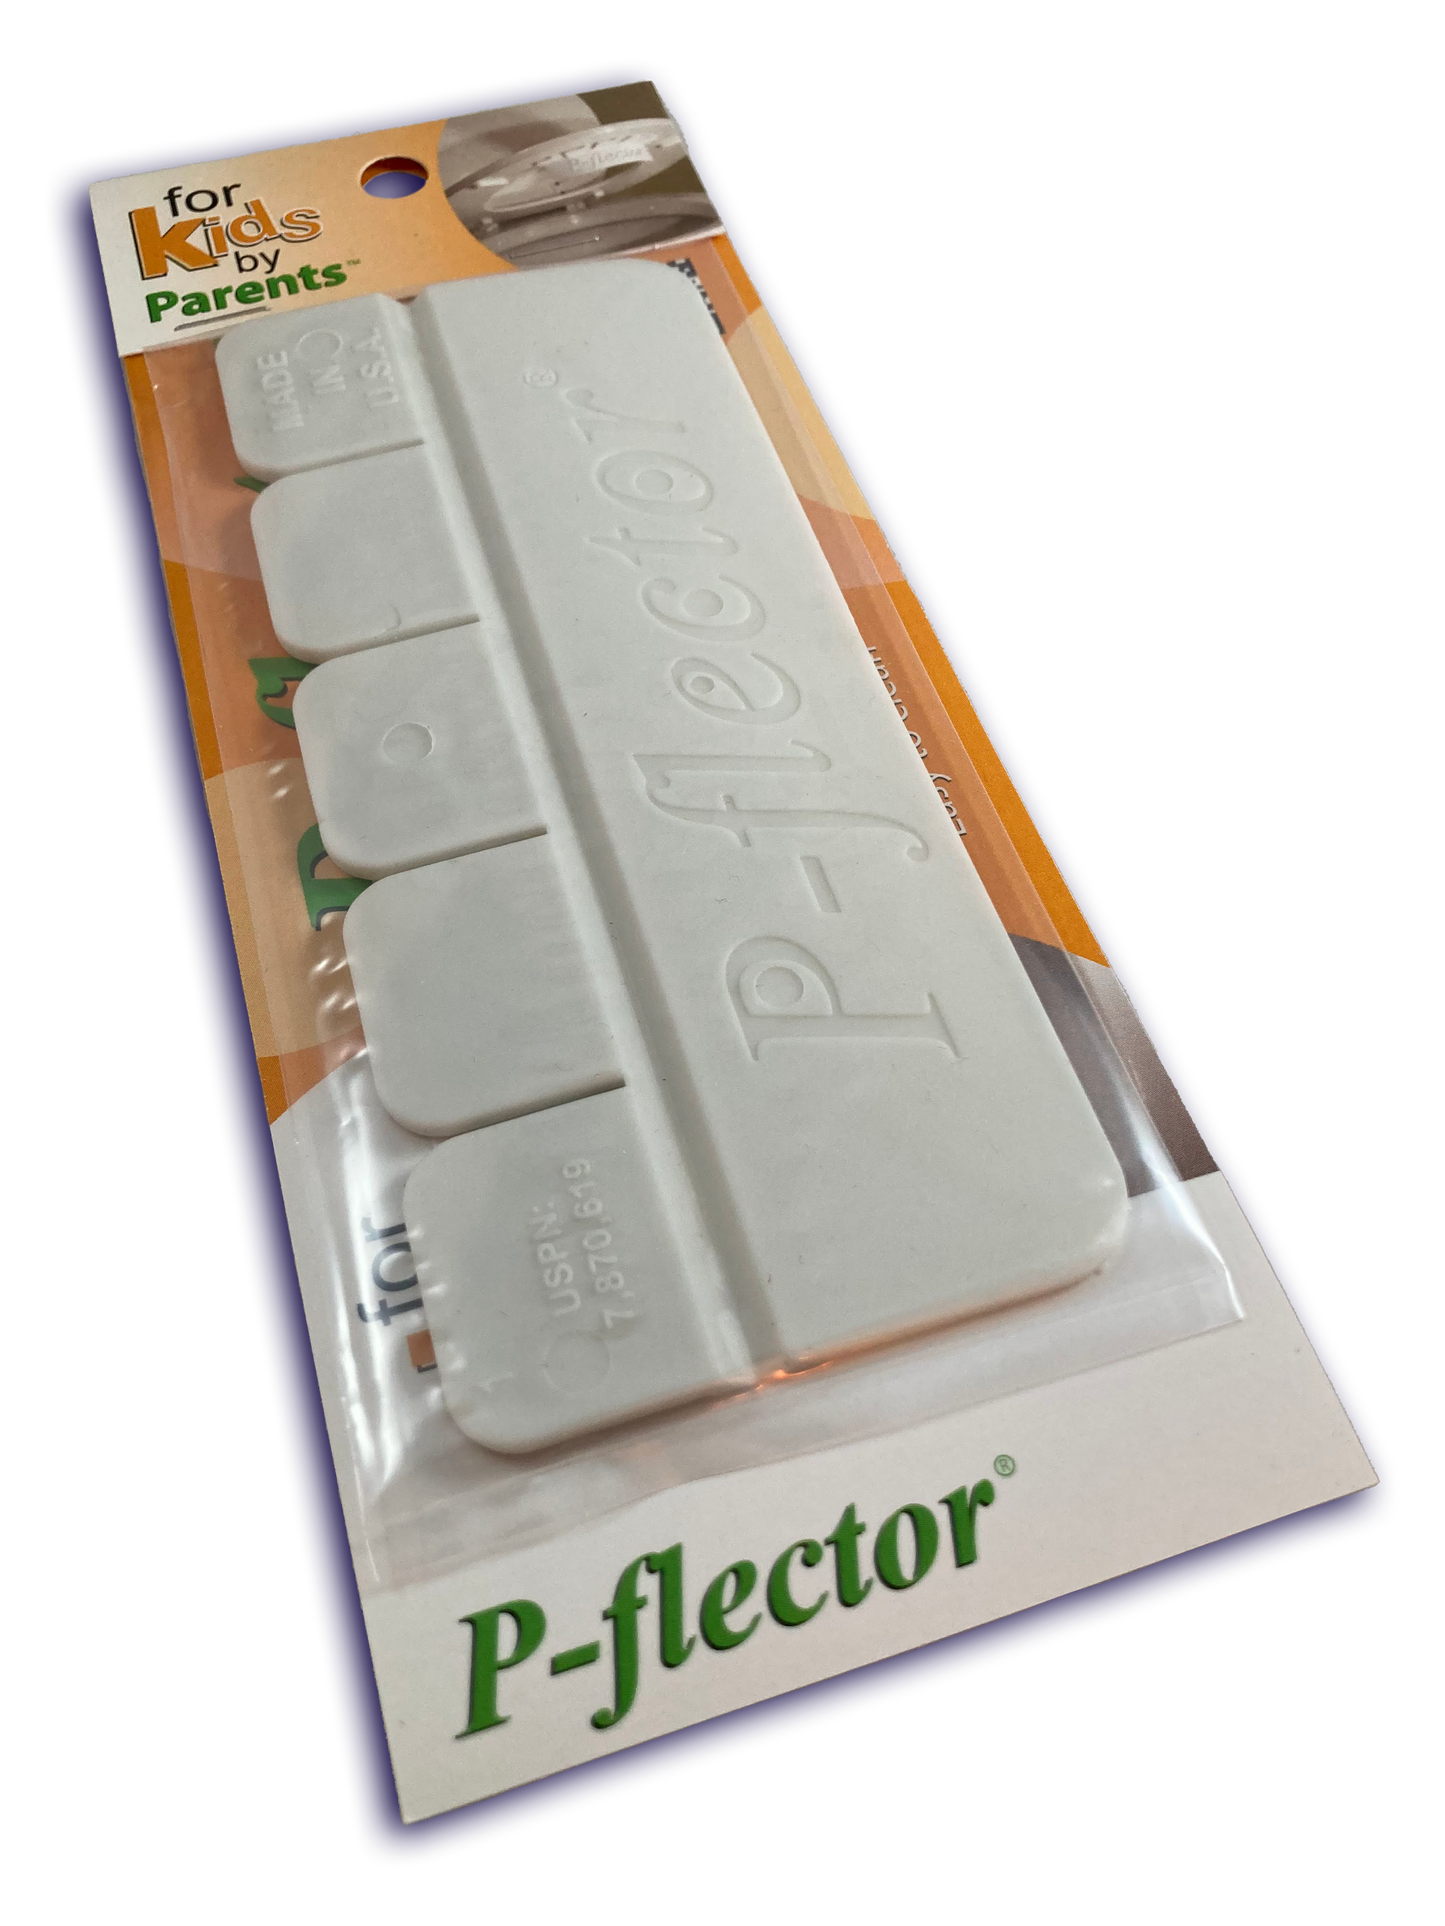 P-flector packaging 